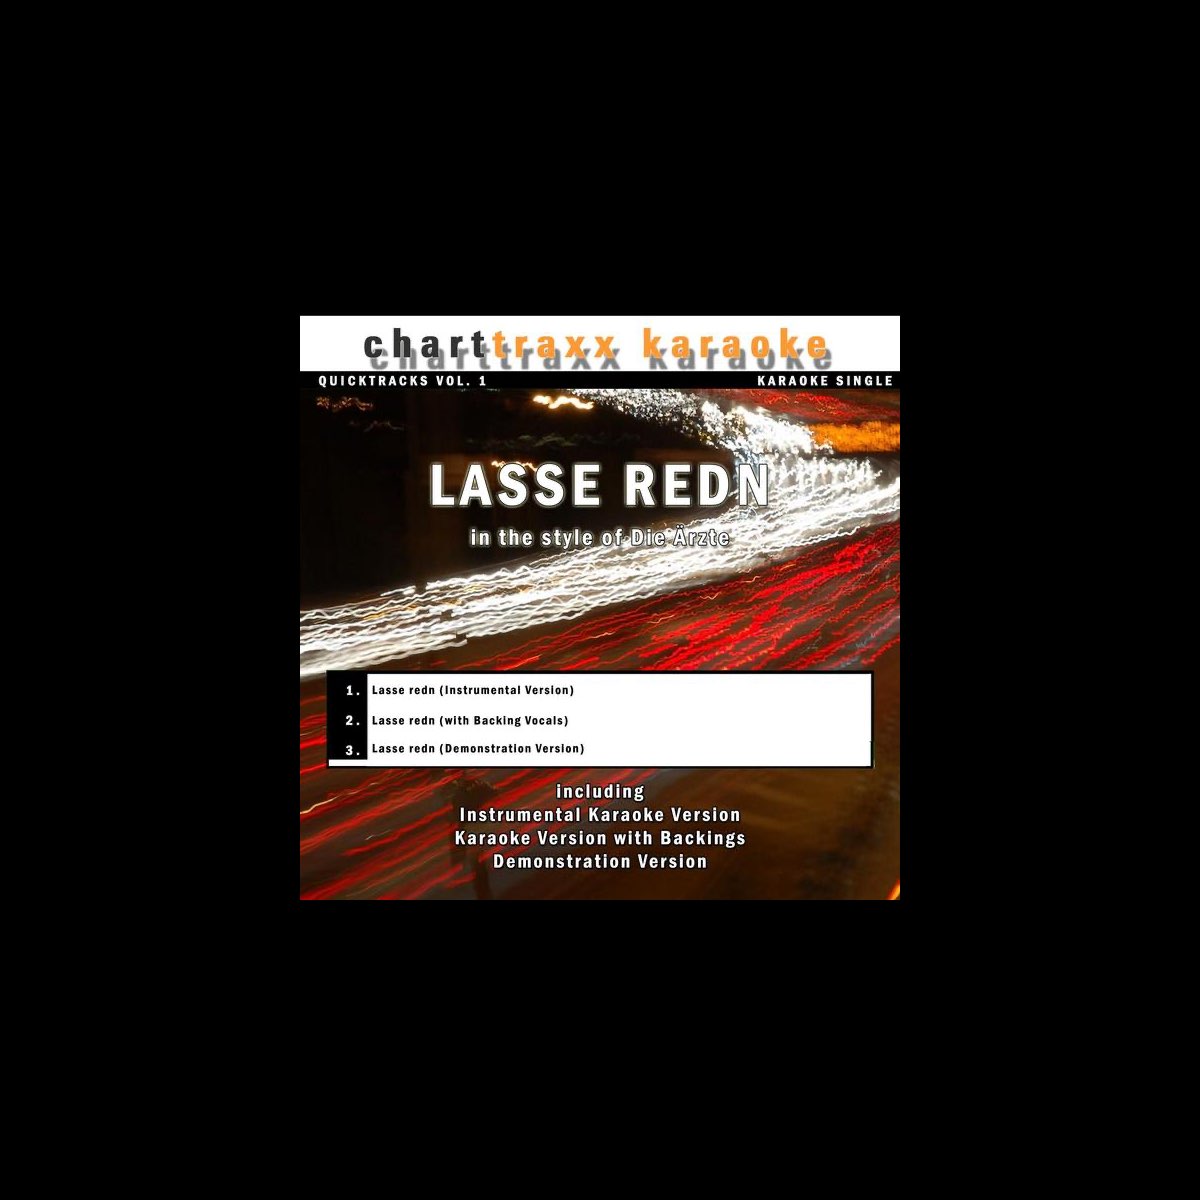 Quicktracks, Vol. 1: Lasse redn (In the Style of Ärzte) - EP by Charttraxx Karaoke on Apple Music